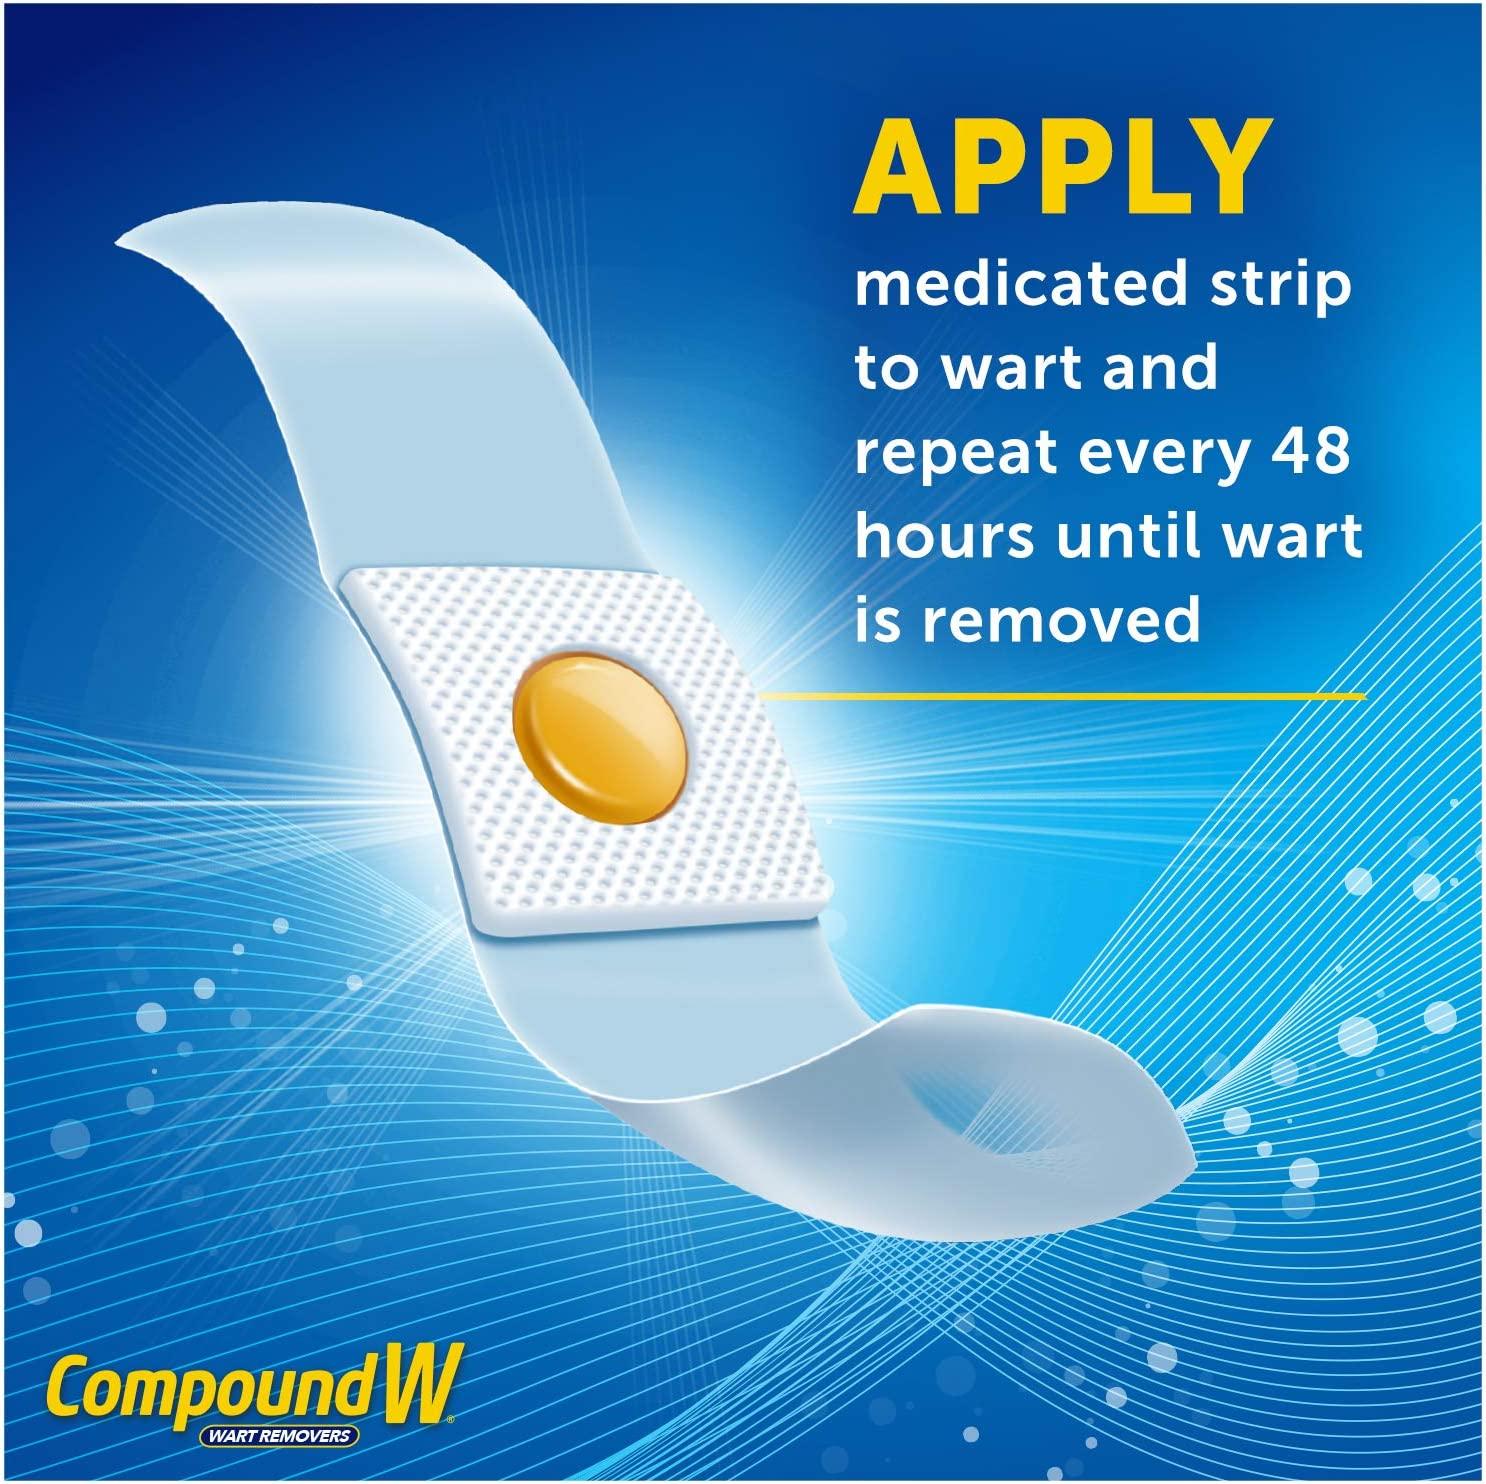 Compound W One Step Pads, Salicylic Acid Wart Remover, 14 Pads